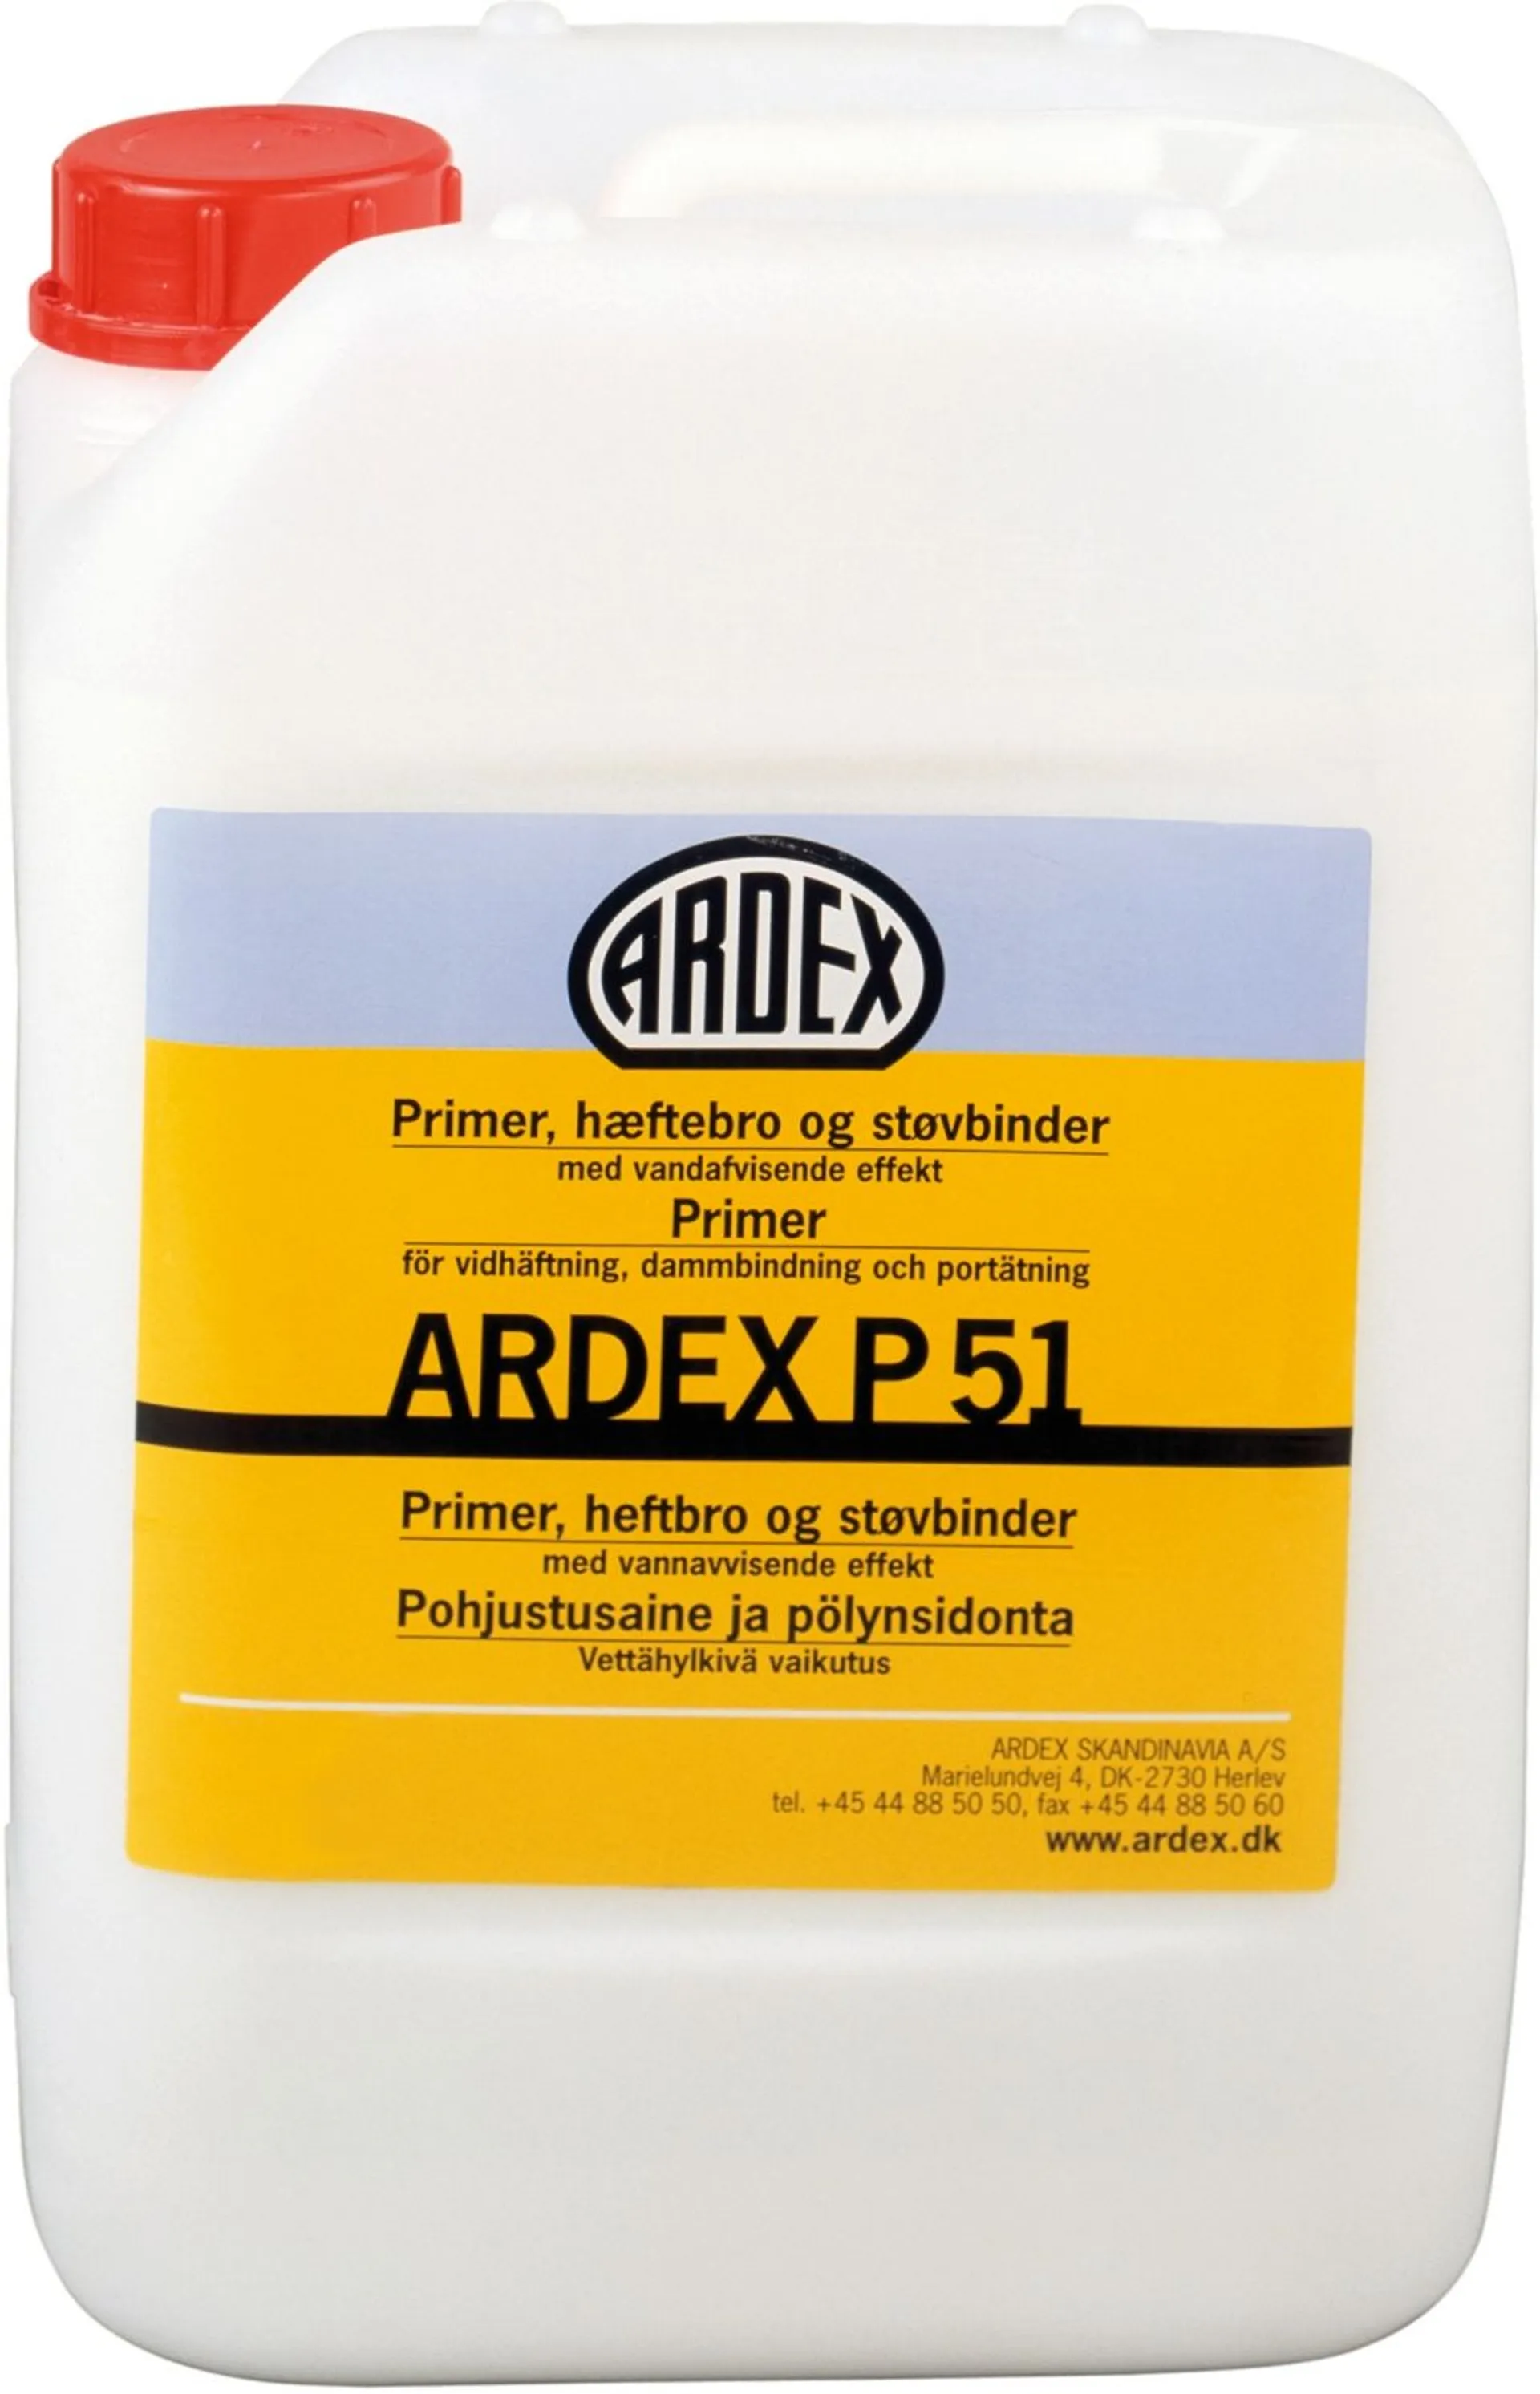 ARDEX P 51 pohjuste 10 kg